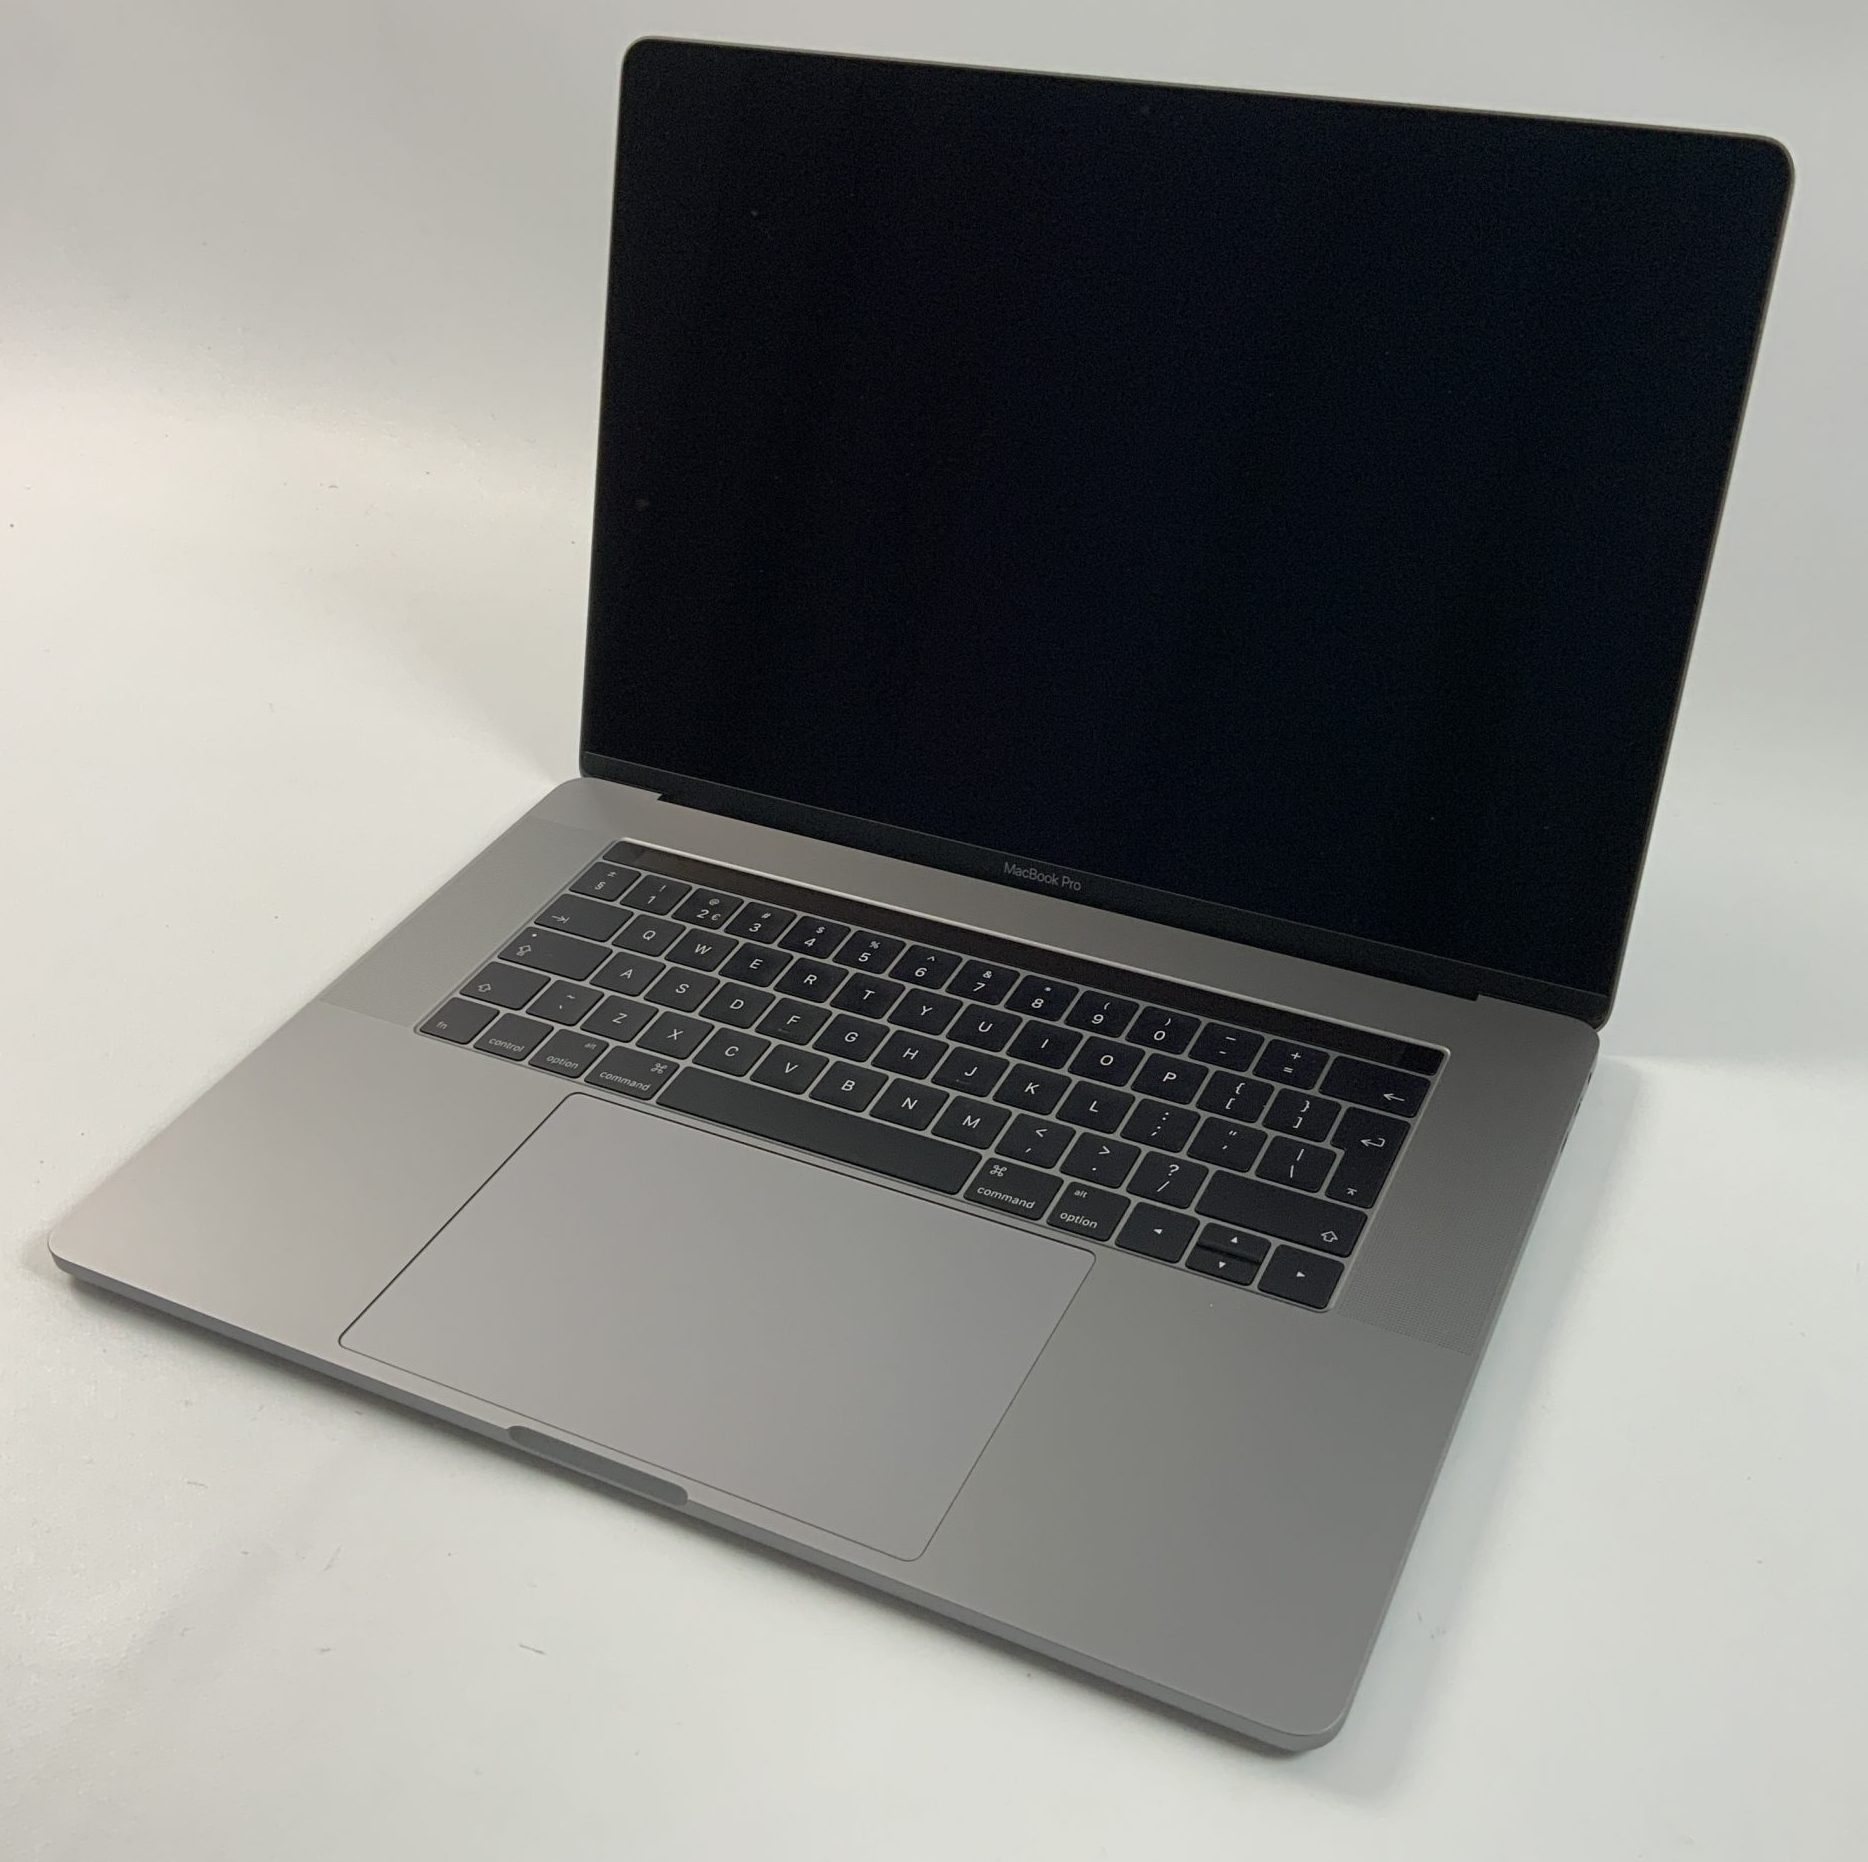 MacBook Pro 15" Touch Bar Late 2016 (Intel Quad-Core i7 2.6 GHz 16 GB RAM 256 GB SSD), Silver, Intel Quad-Core i7 2.6 GHz, 16 GB RAM, 256 GB SSD, Kuva 1